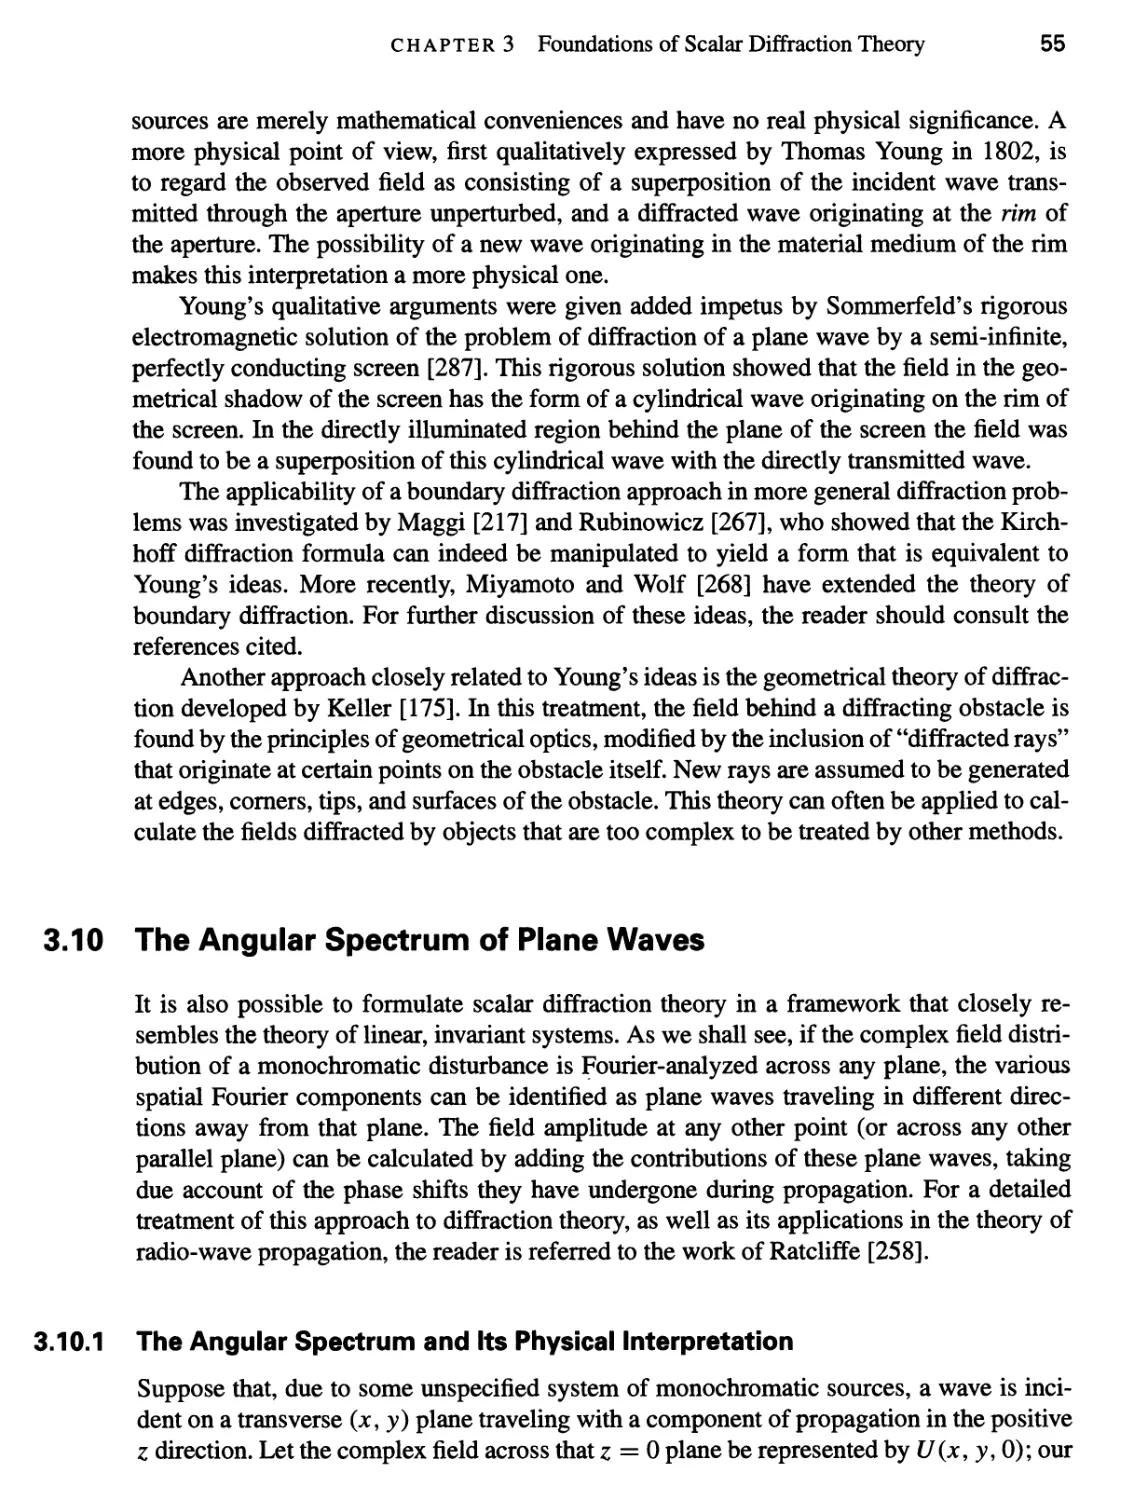 3.10 The Angular Spectrum of Plane Waves 55